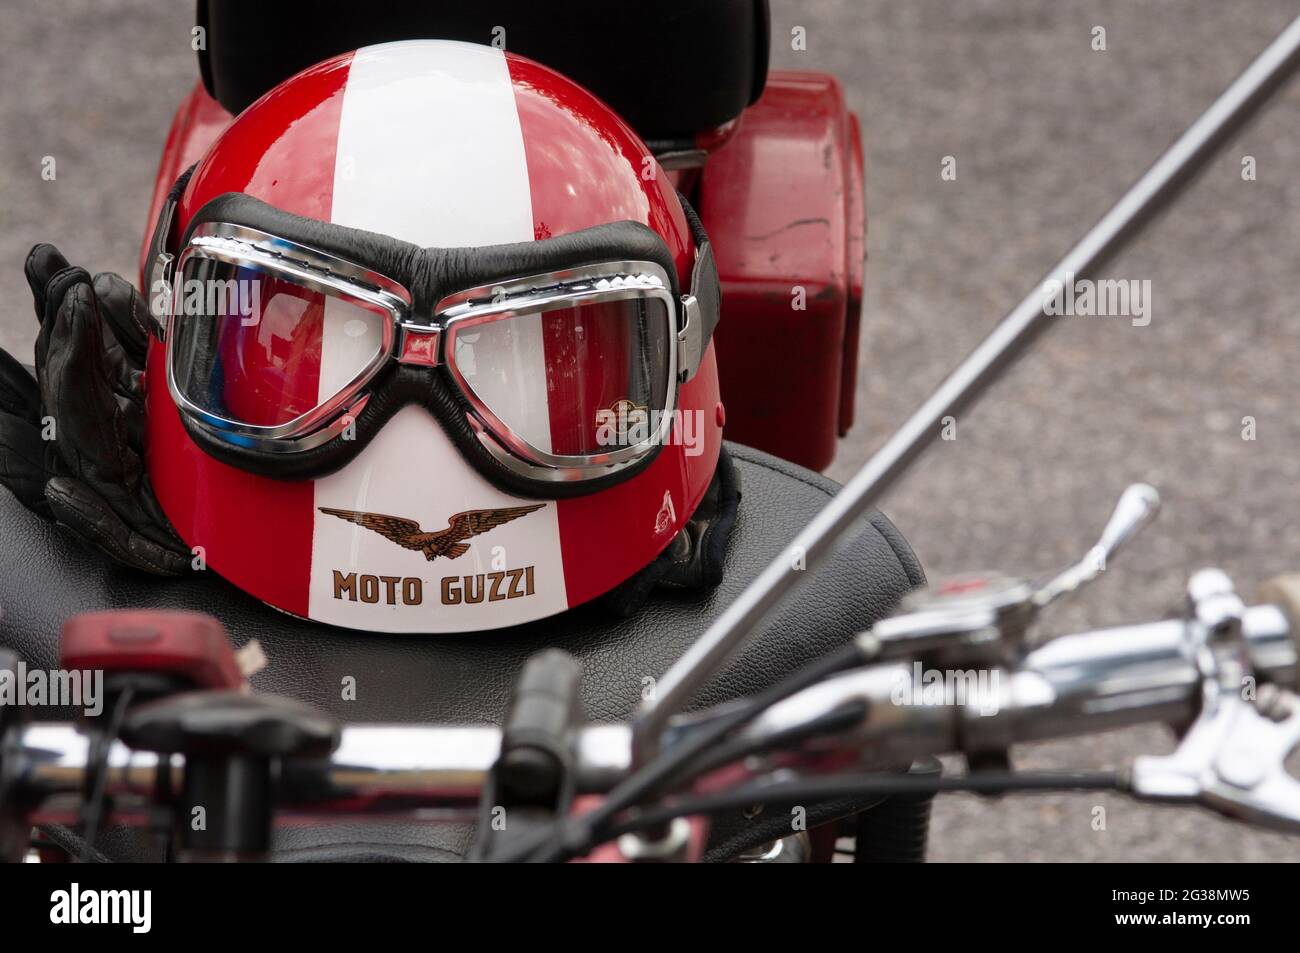 Italy, Lombardy, Meeting of Vintage Motorcycle, Helmet Stock Photo - Alamy